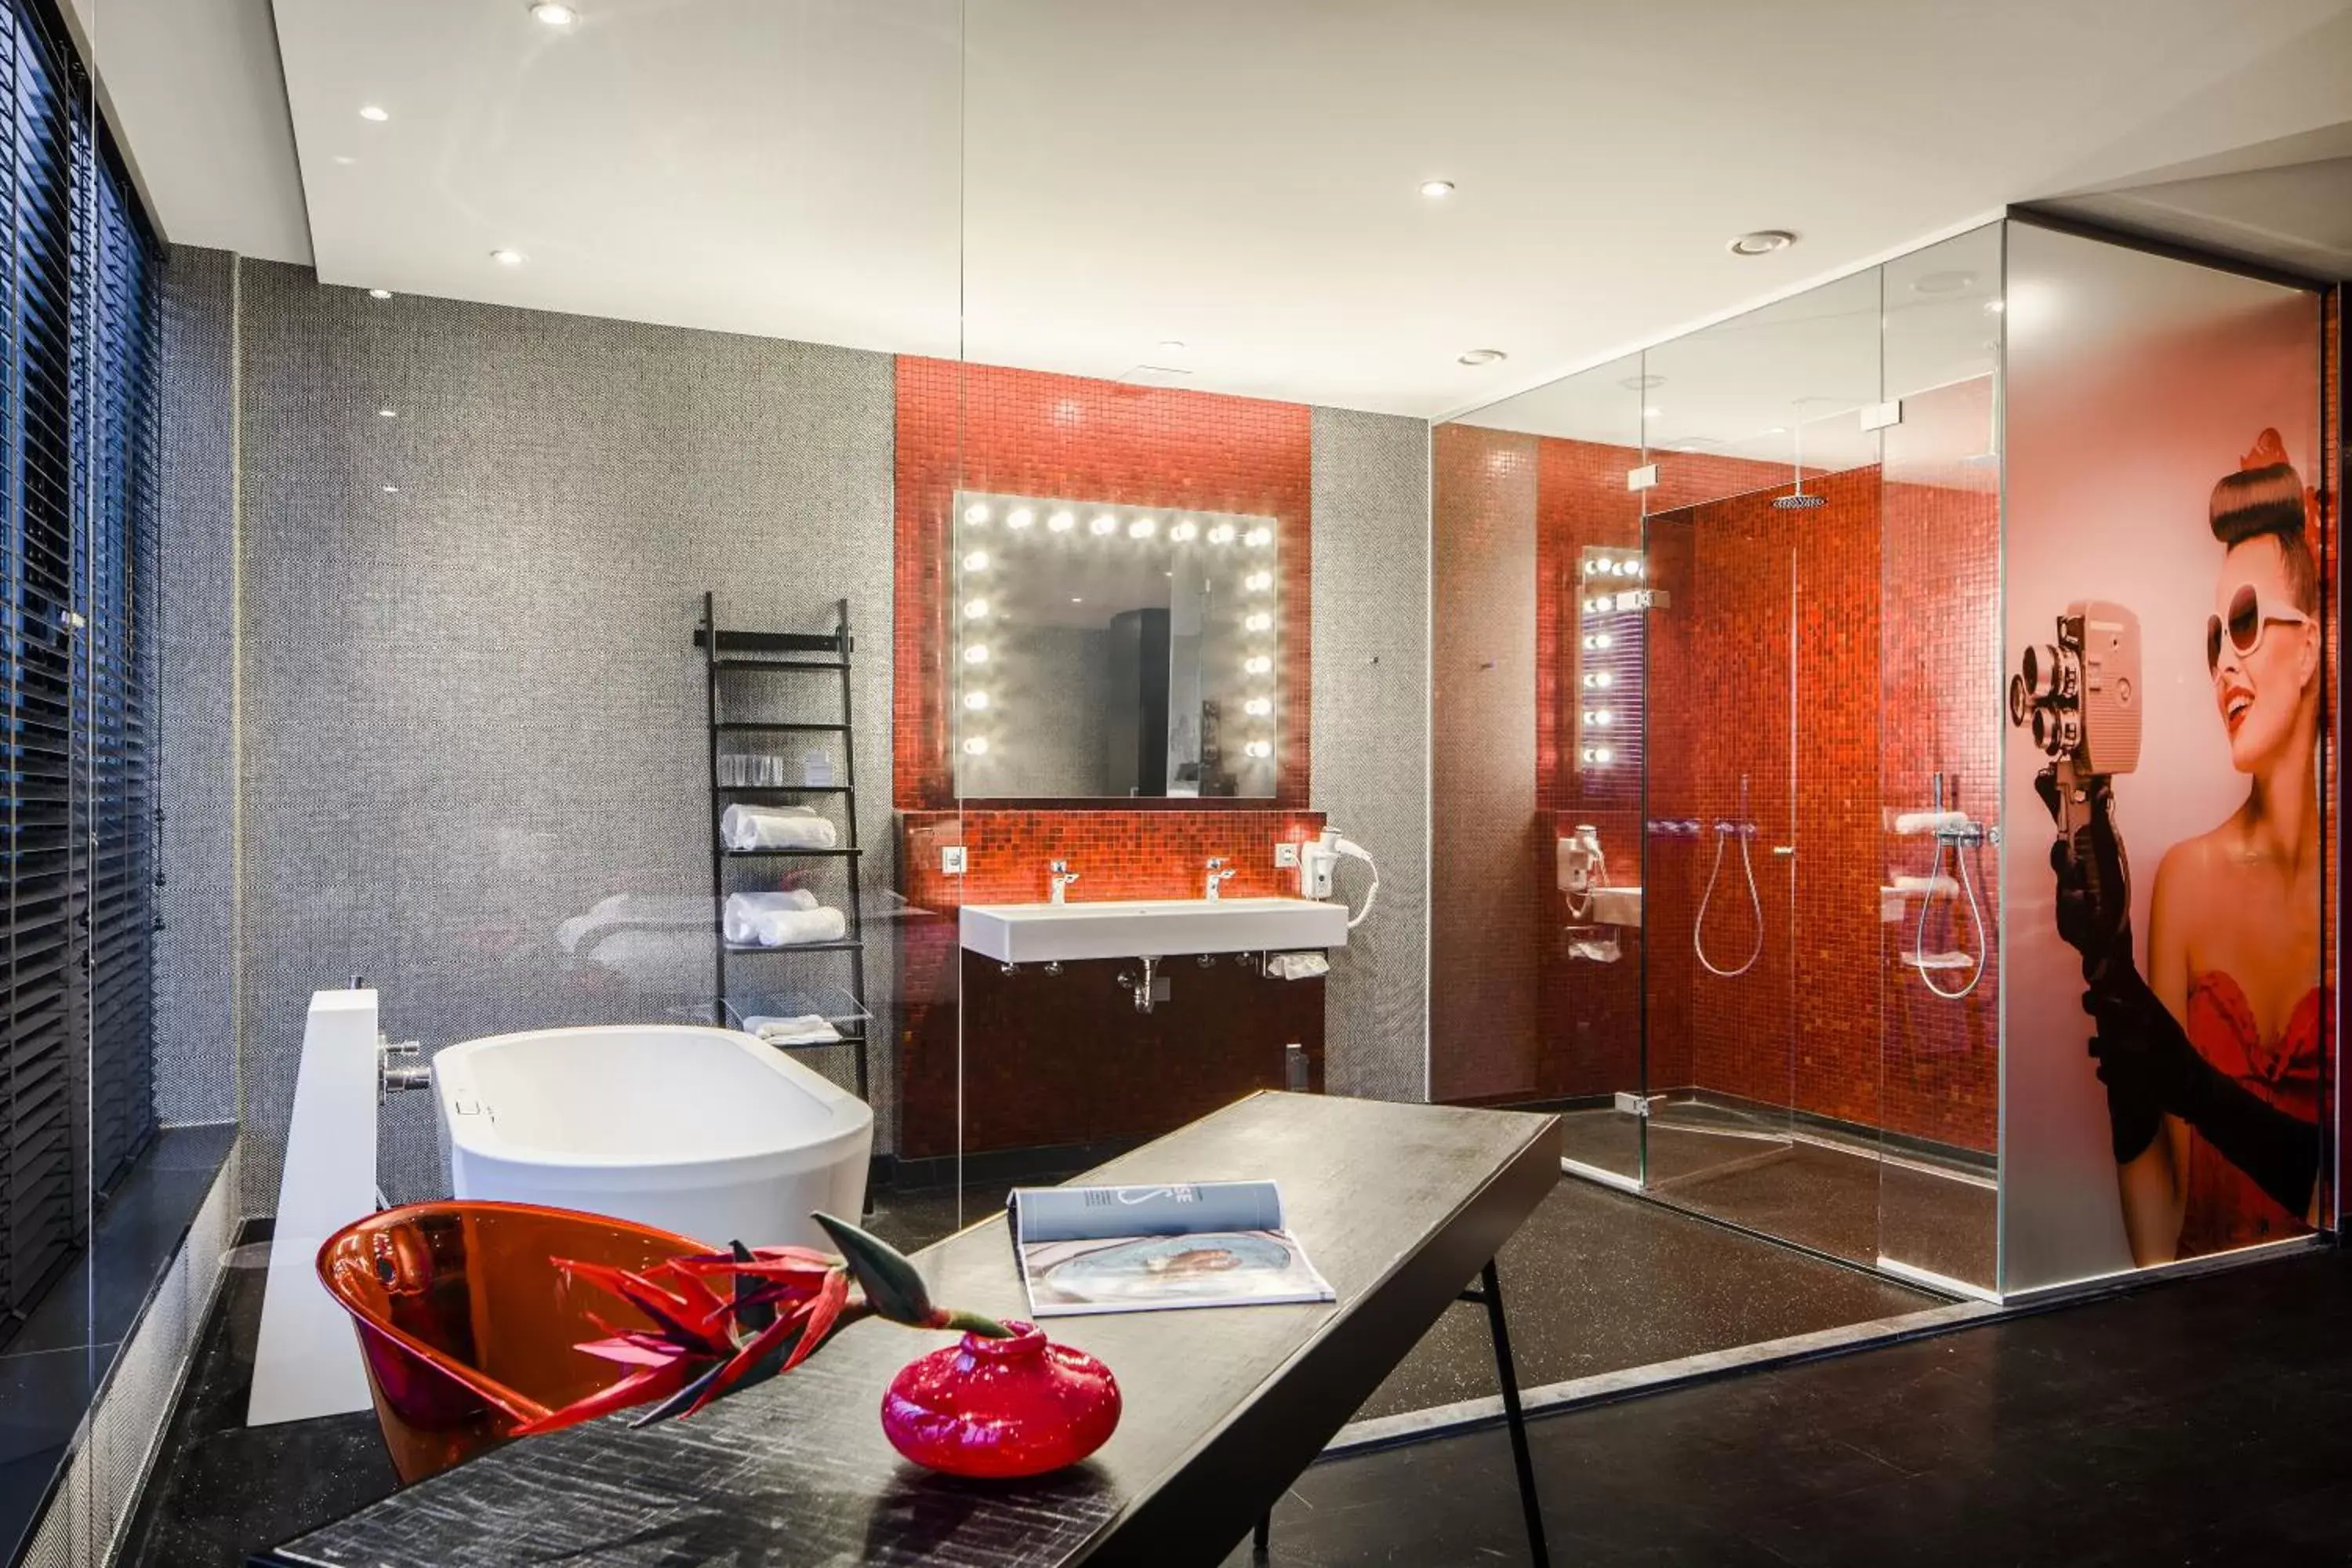 Bathroom in Van der Valk hotel Veenendaal